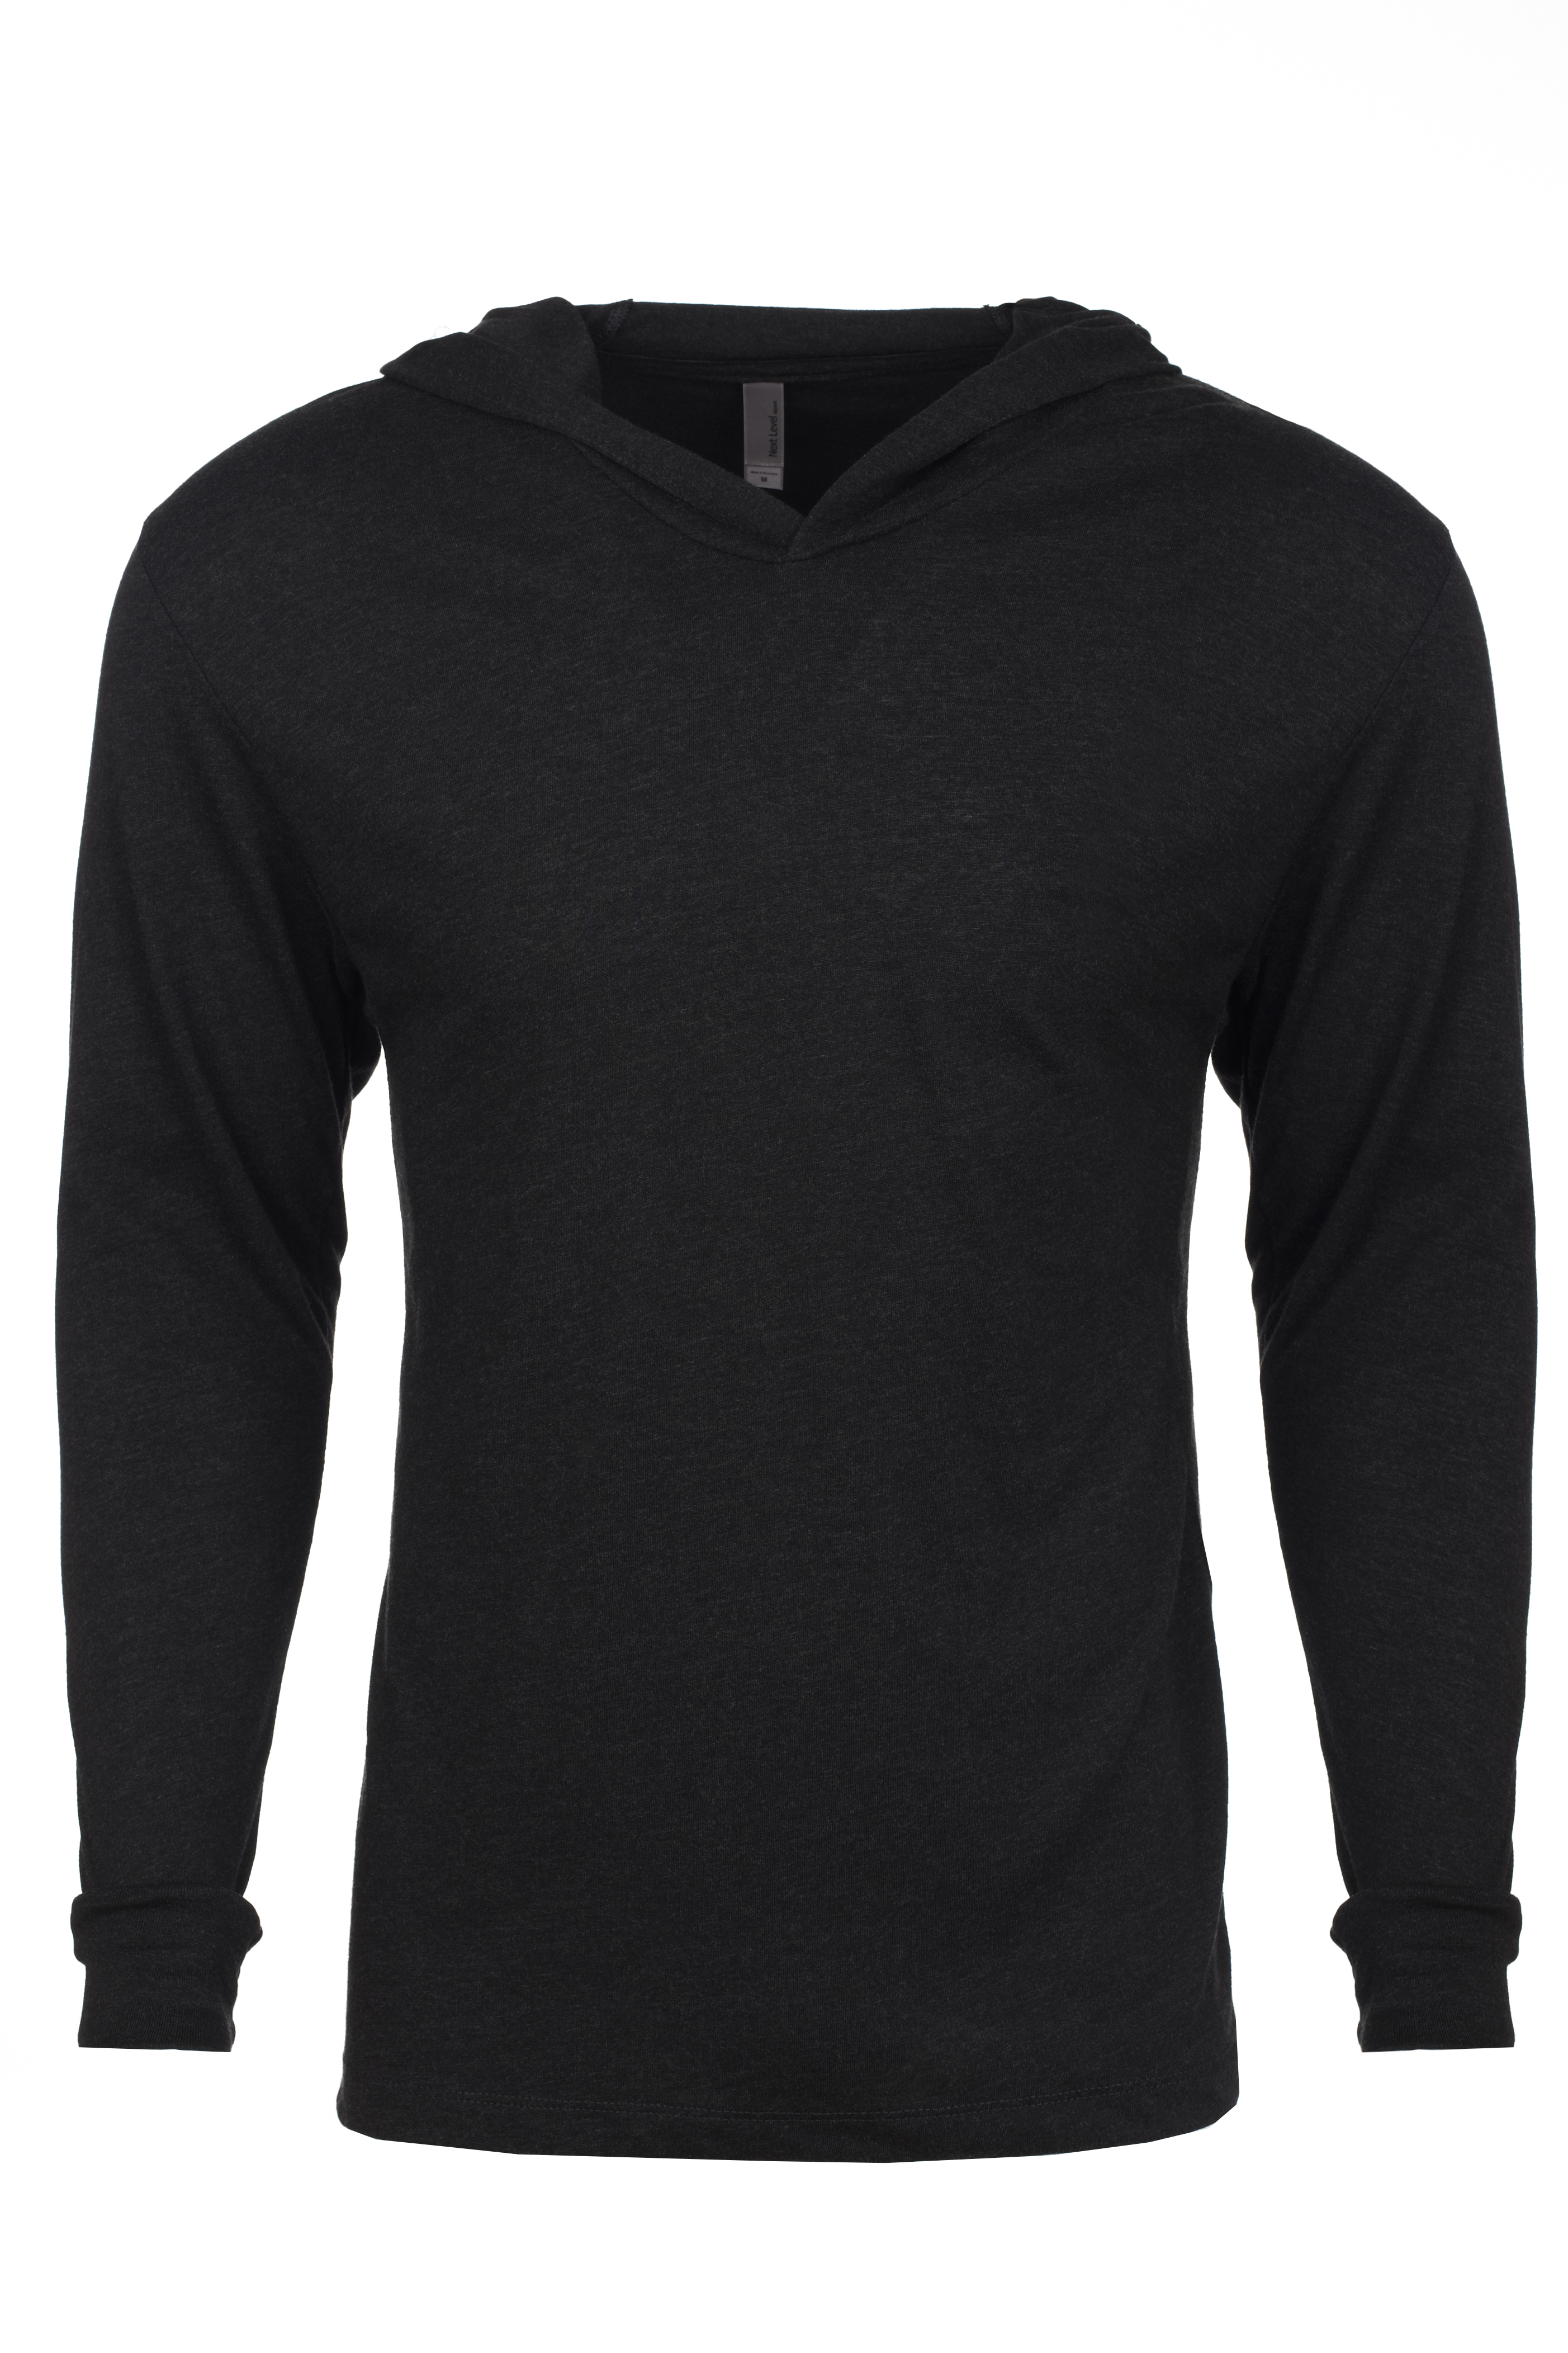 Next Level Apparel® 6021 Unisex Tri-Blend Long Sleeve Hoodie T-Shirt